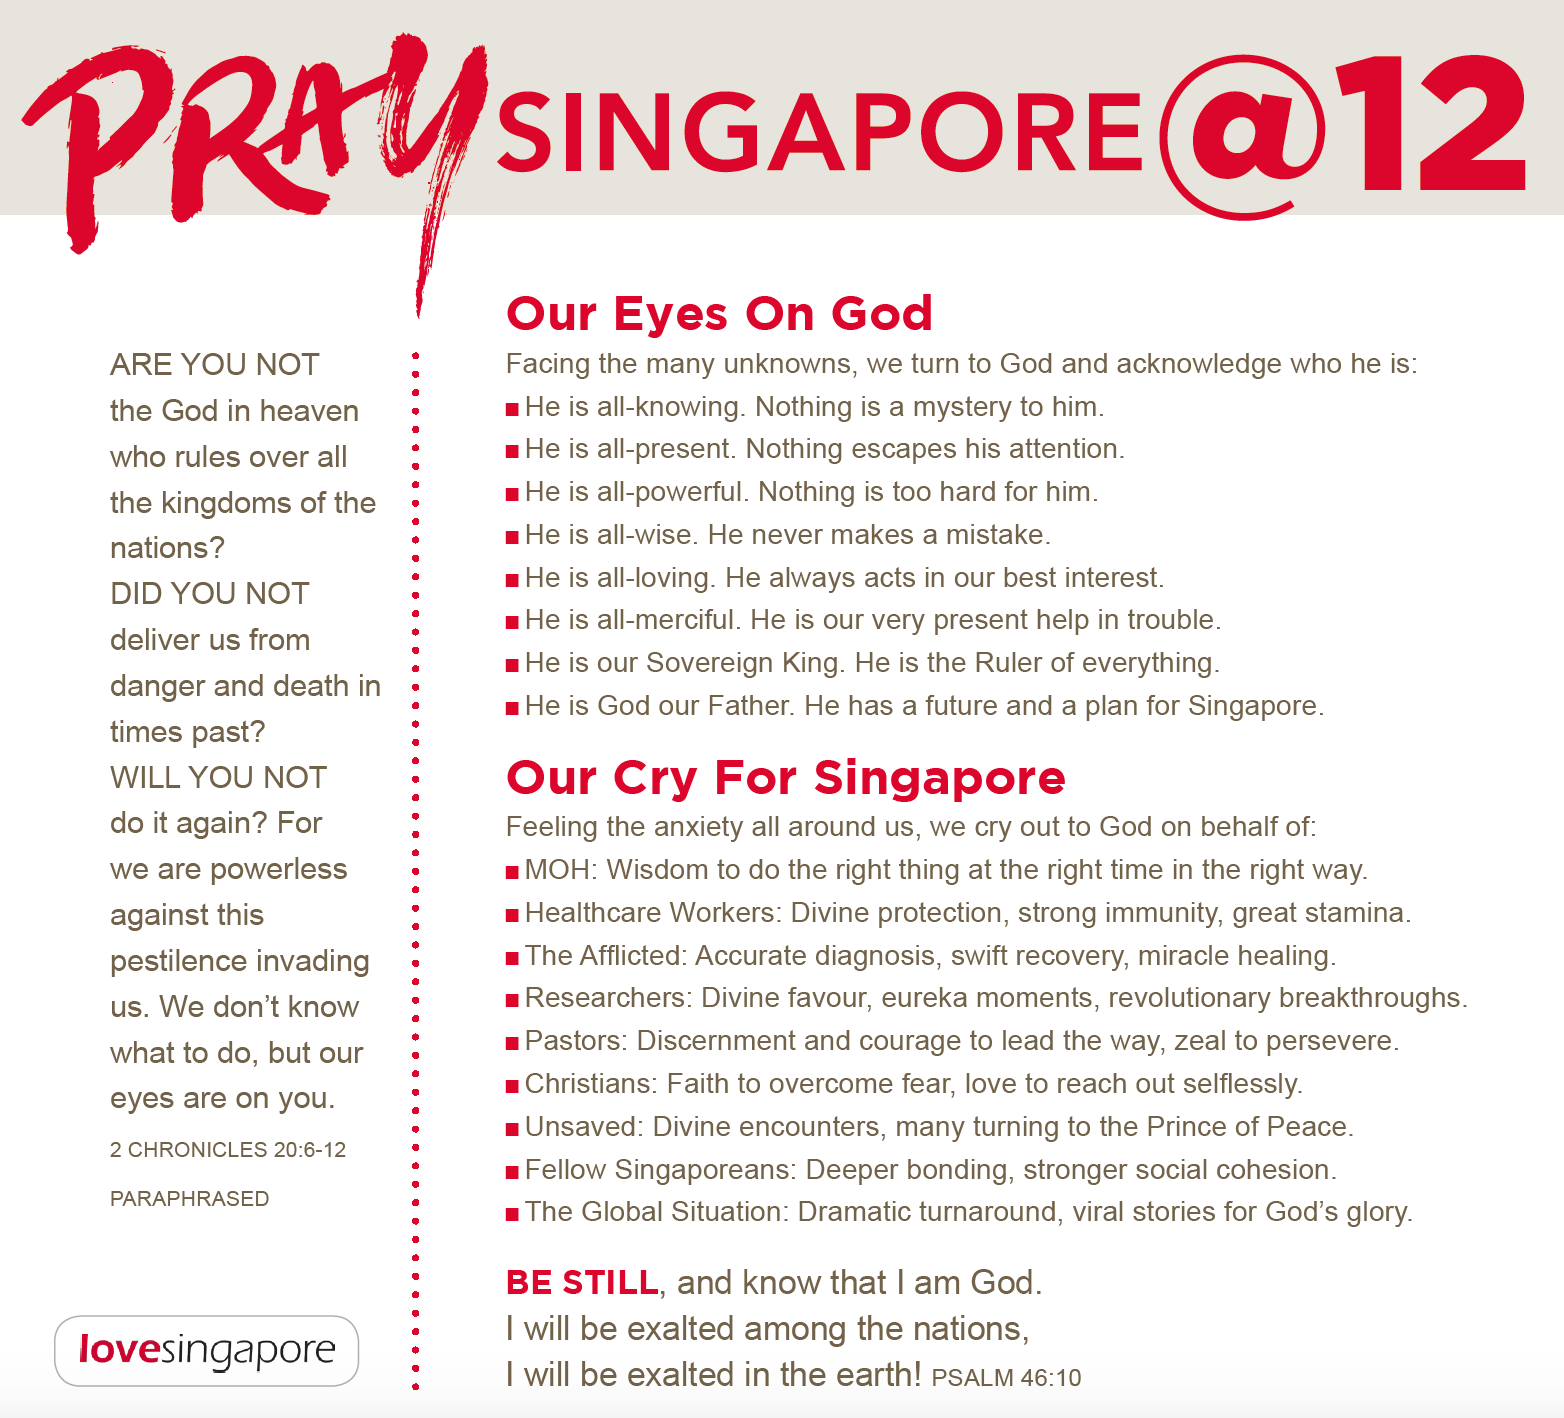 PraySingapore@12 Prayer Guide